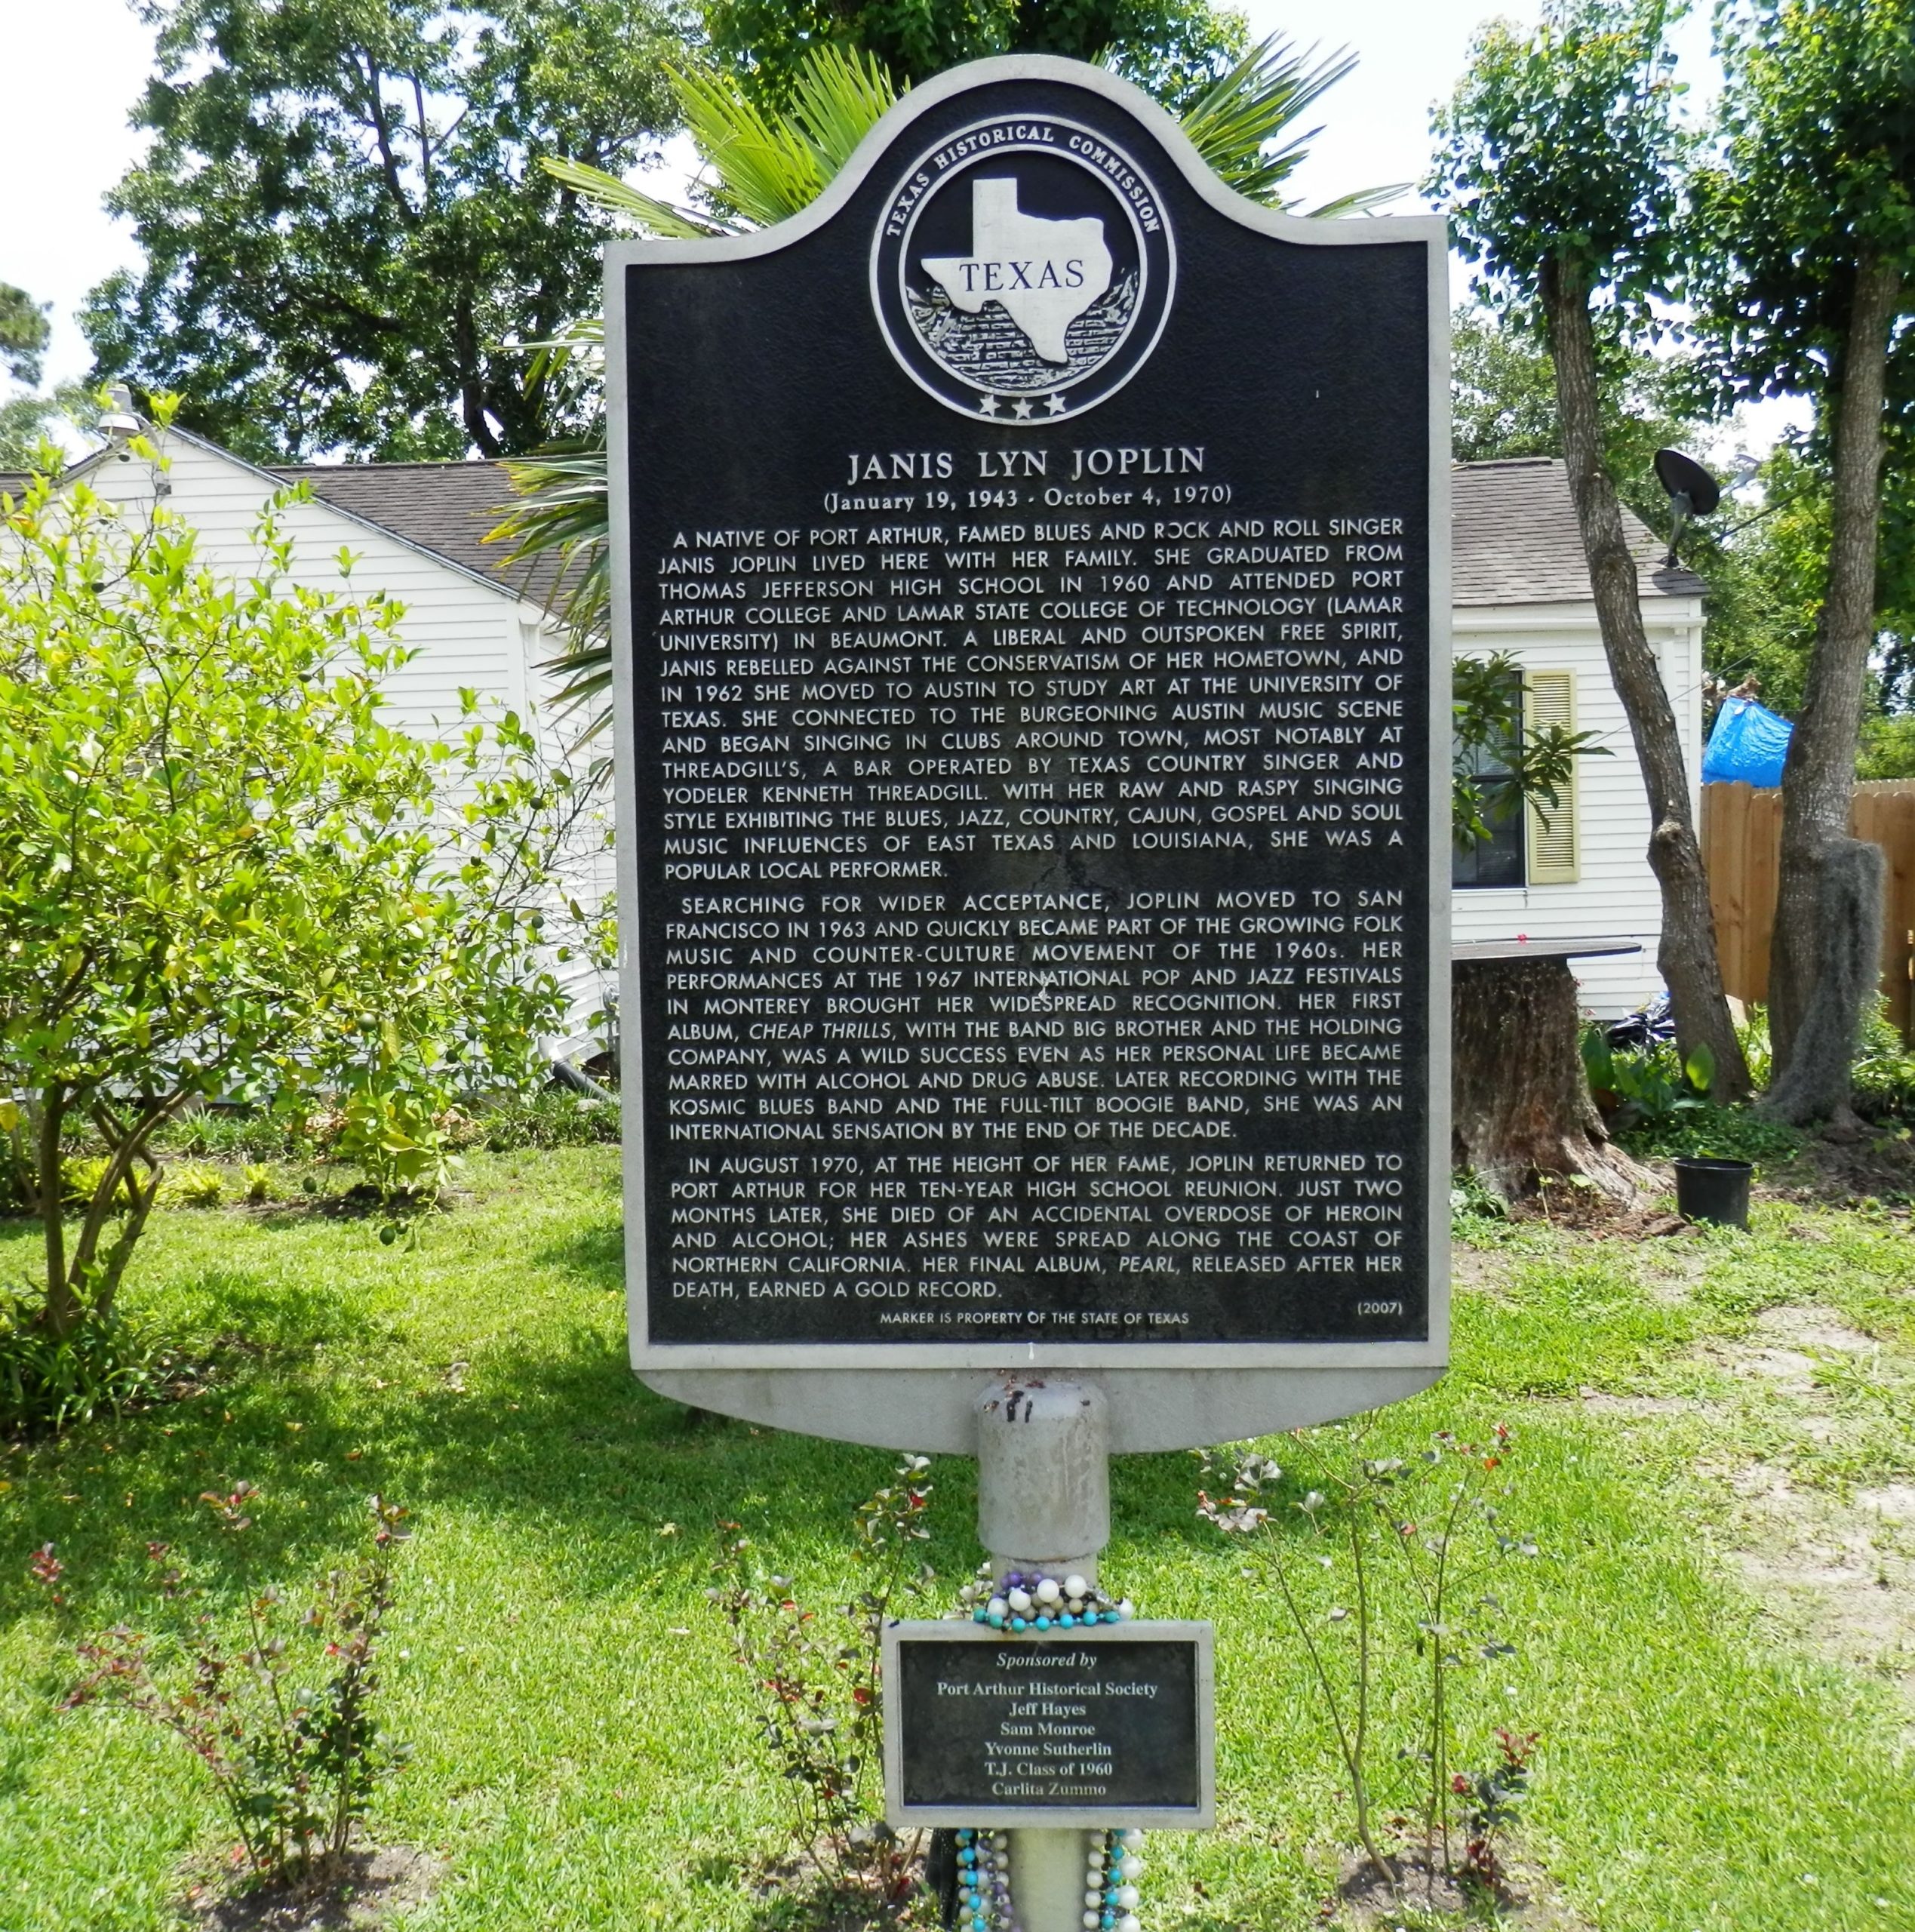 Janis Joplin's historical marker at her childhood home in Port Arthur, Texas